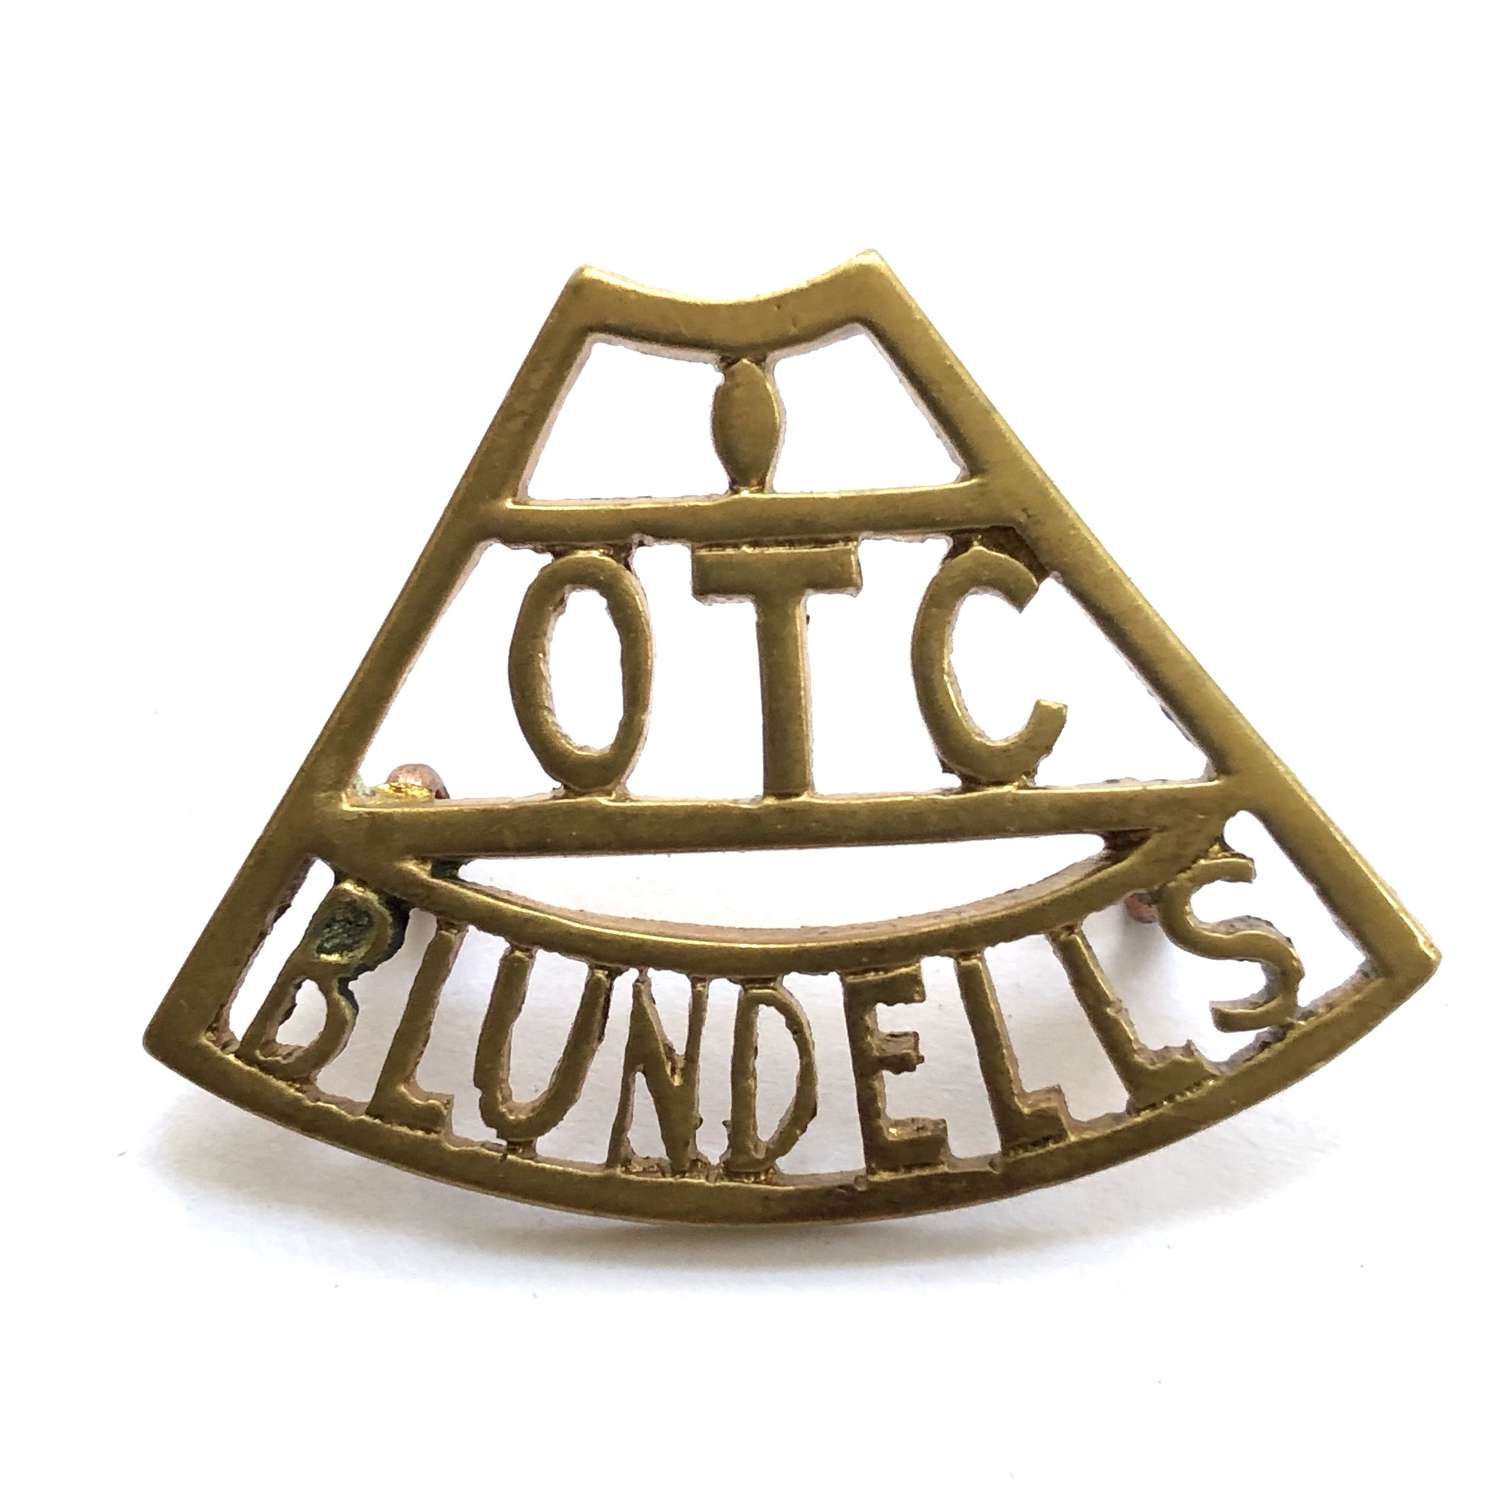 OTC / BLUNDELL Tiverton shoulder title circa 1908-40